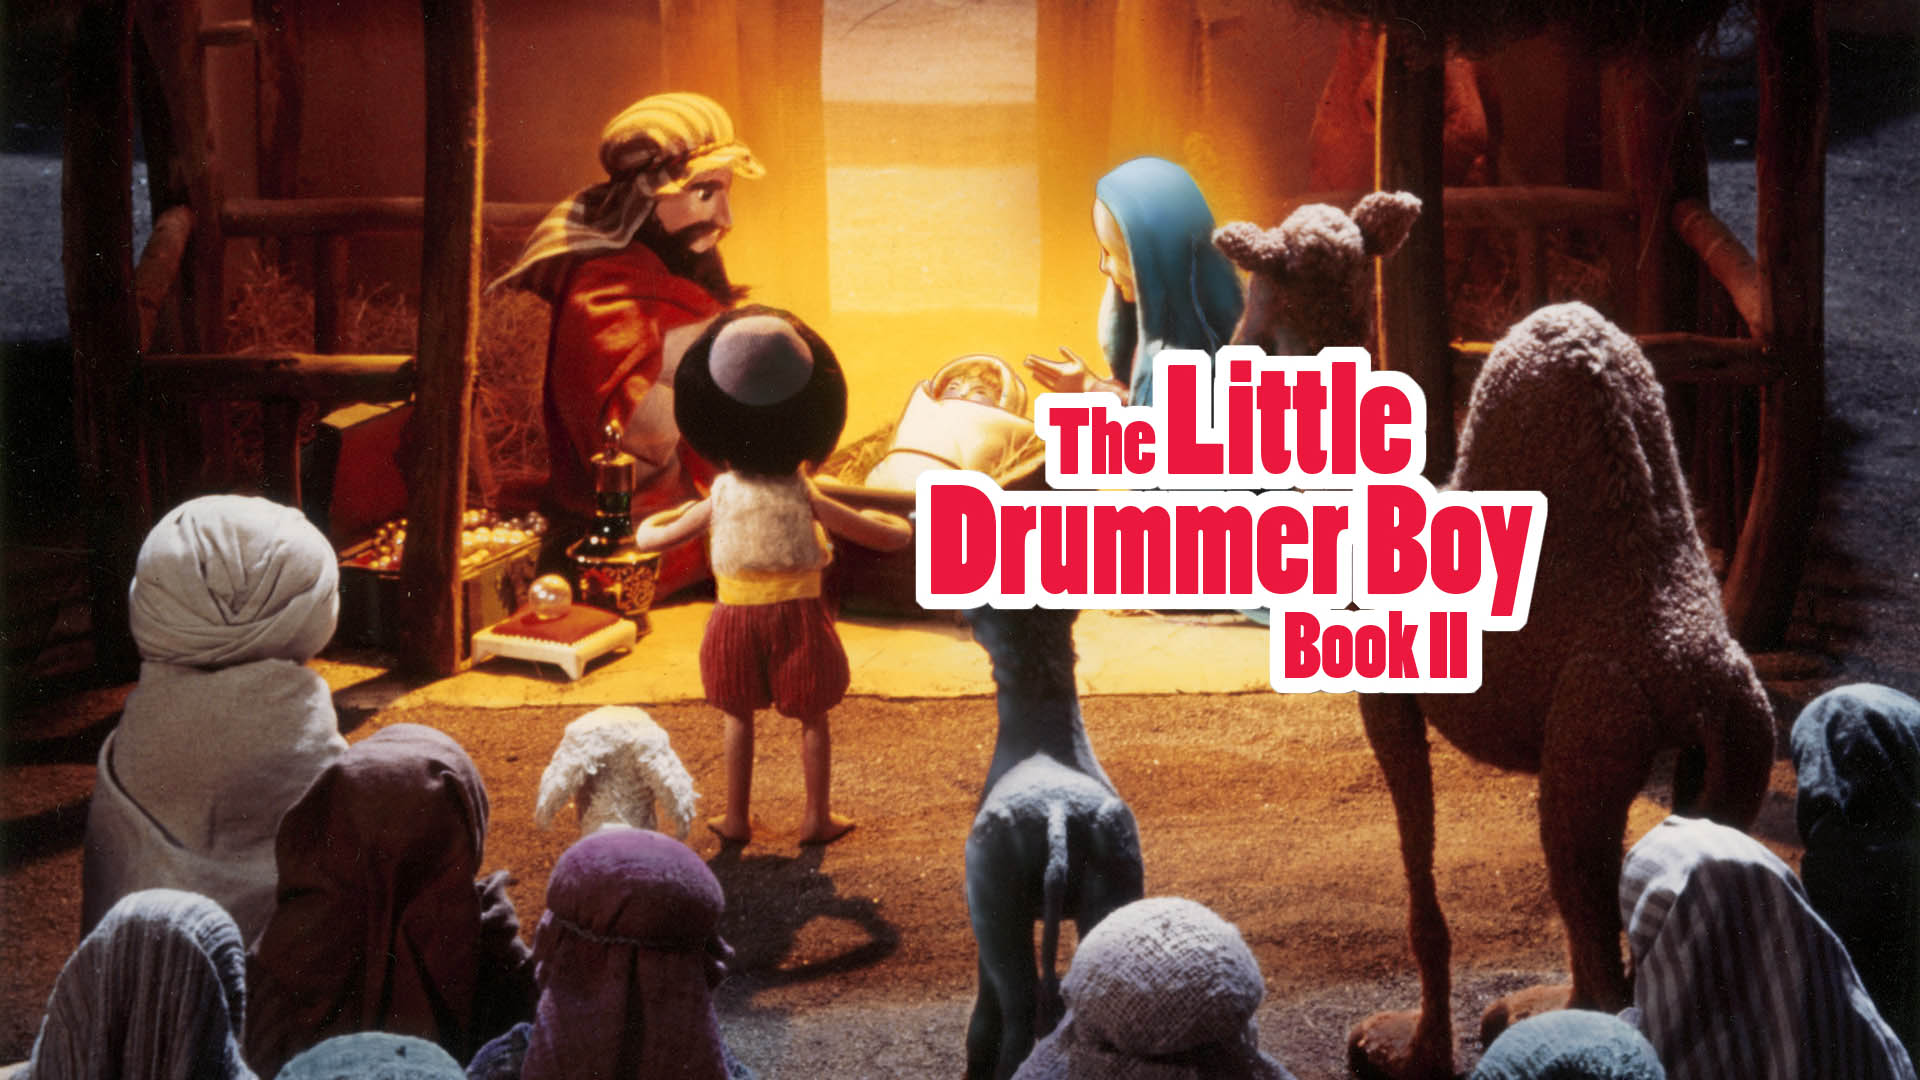 Watch The Little Drummer Boy Book II Online | Stream Full Movies